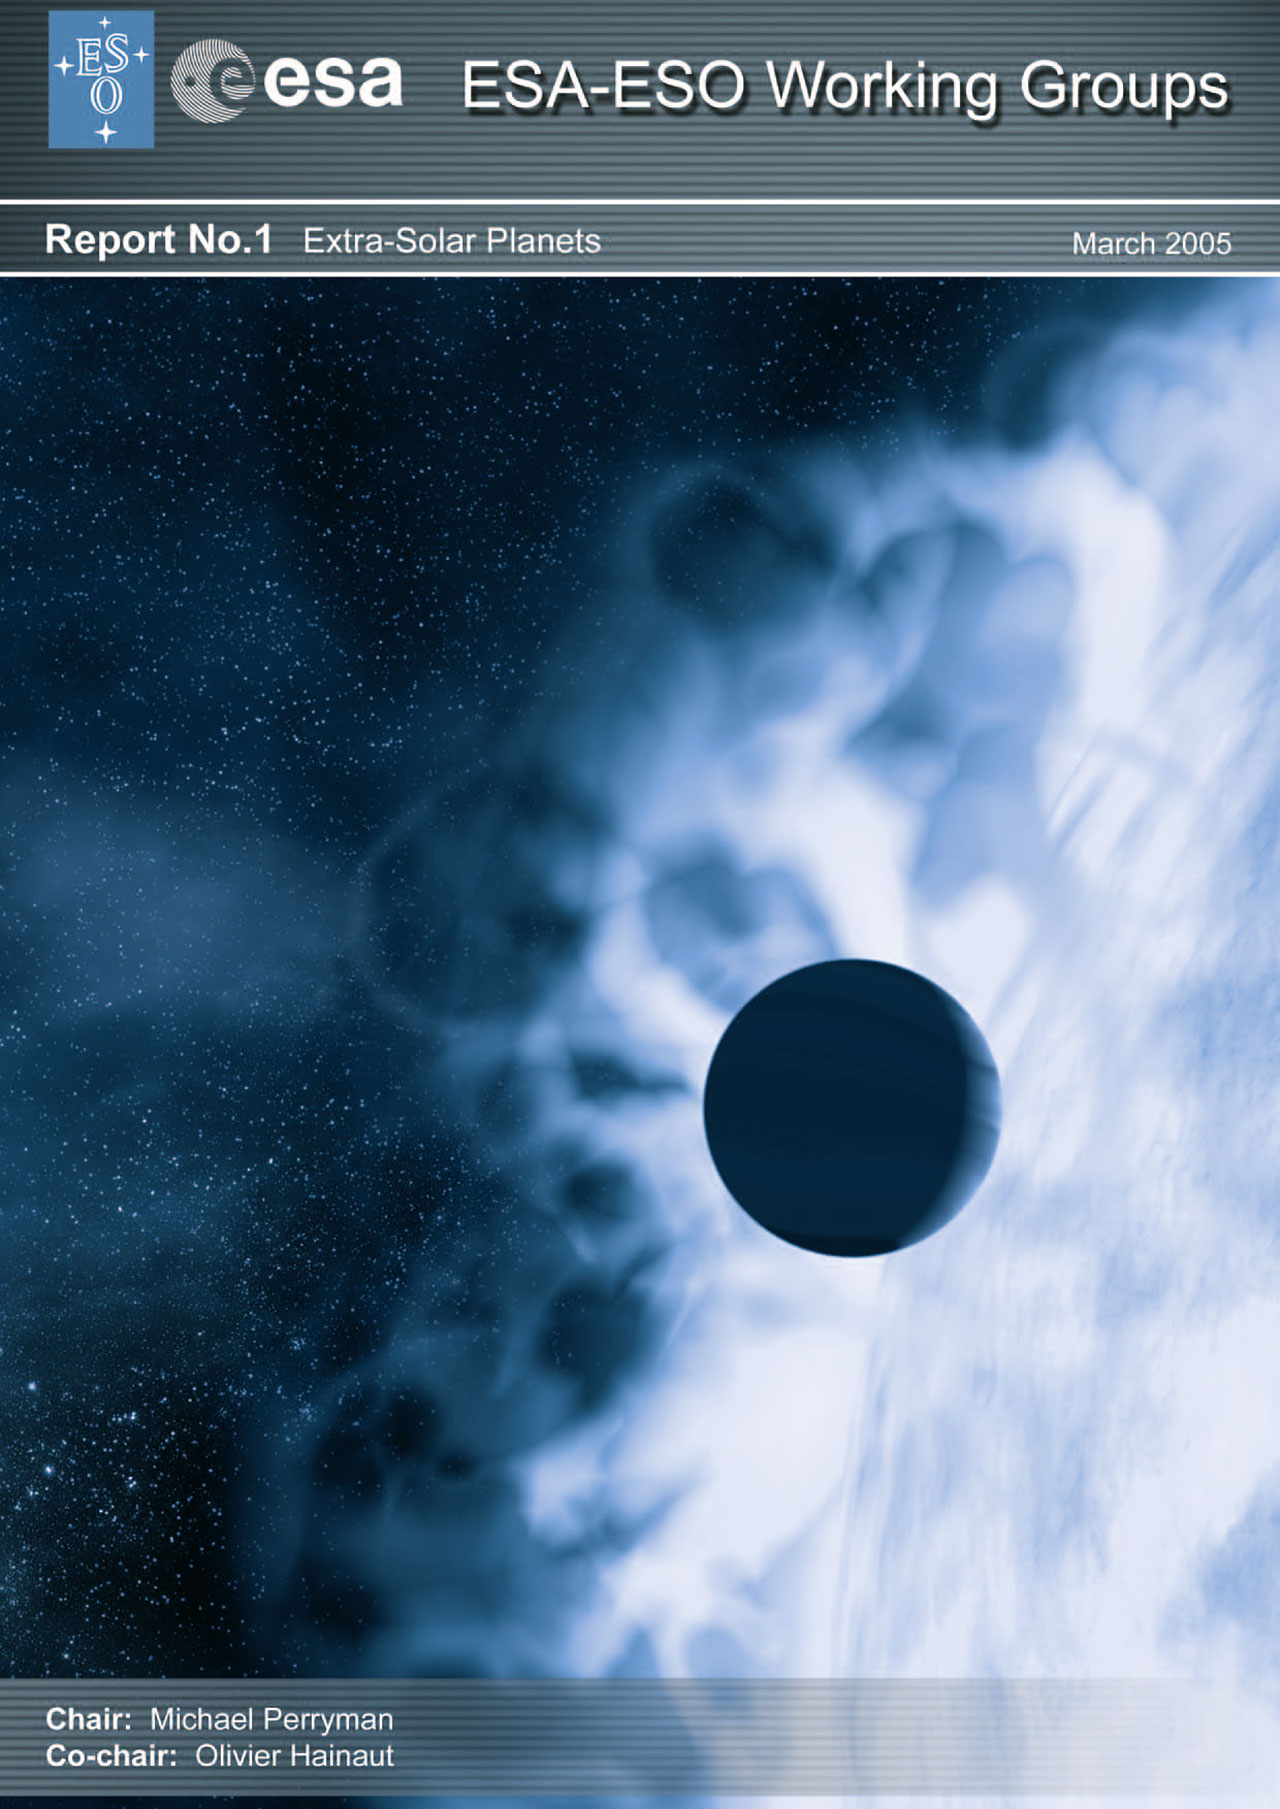 ESA-ESO WG report on Extrasolar Planets (March 2005)